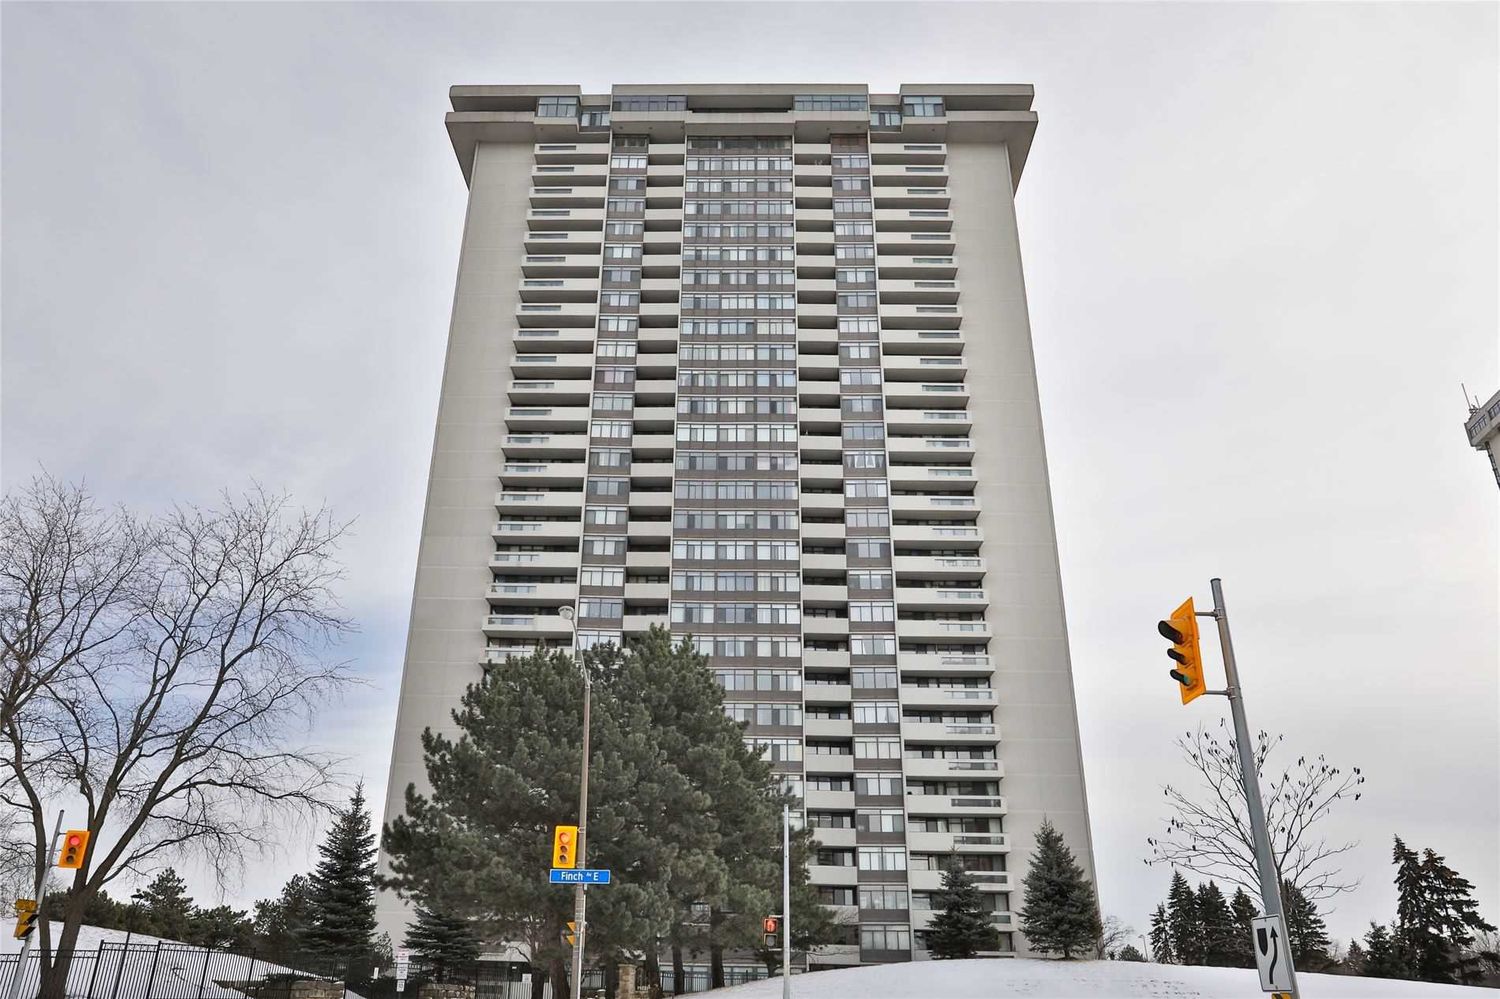 1555 Finch Avenue E. Skymark II Condos is located in  North York, Toronto - image #1 of 2